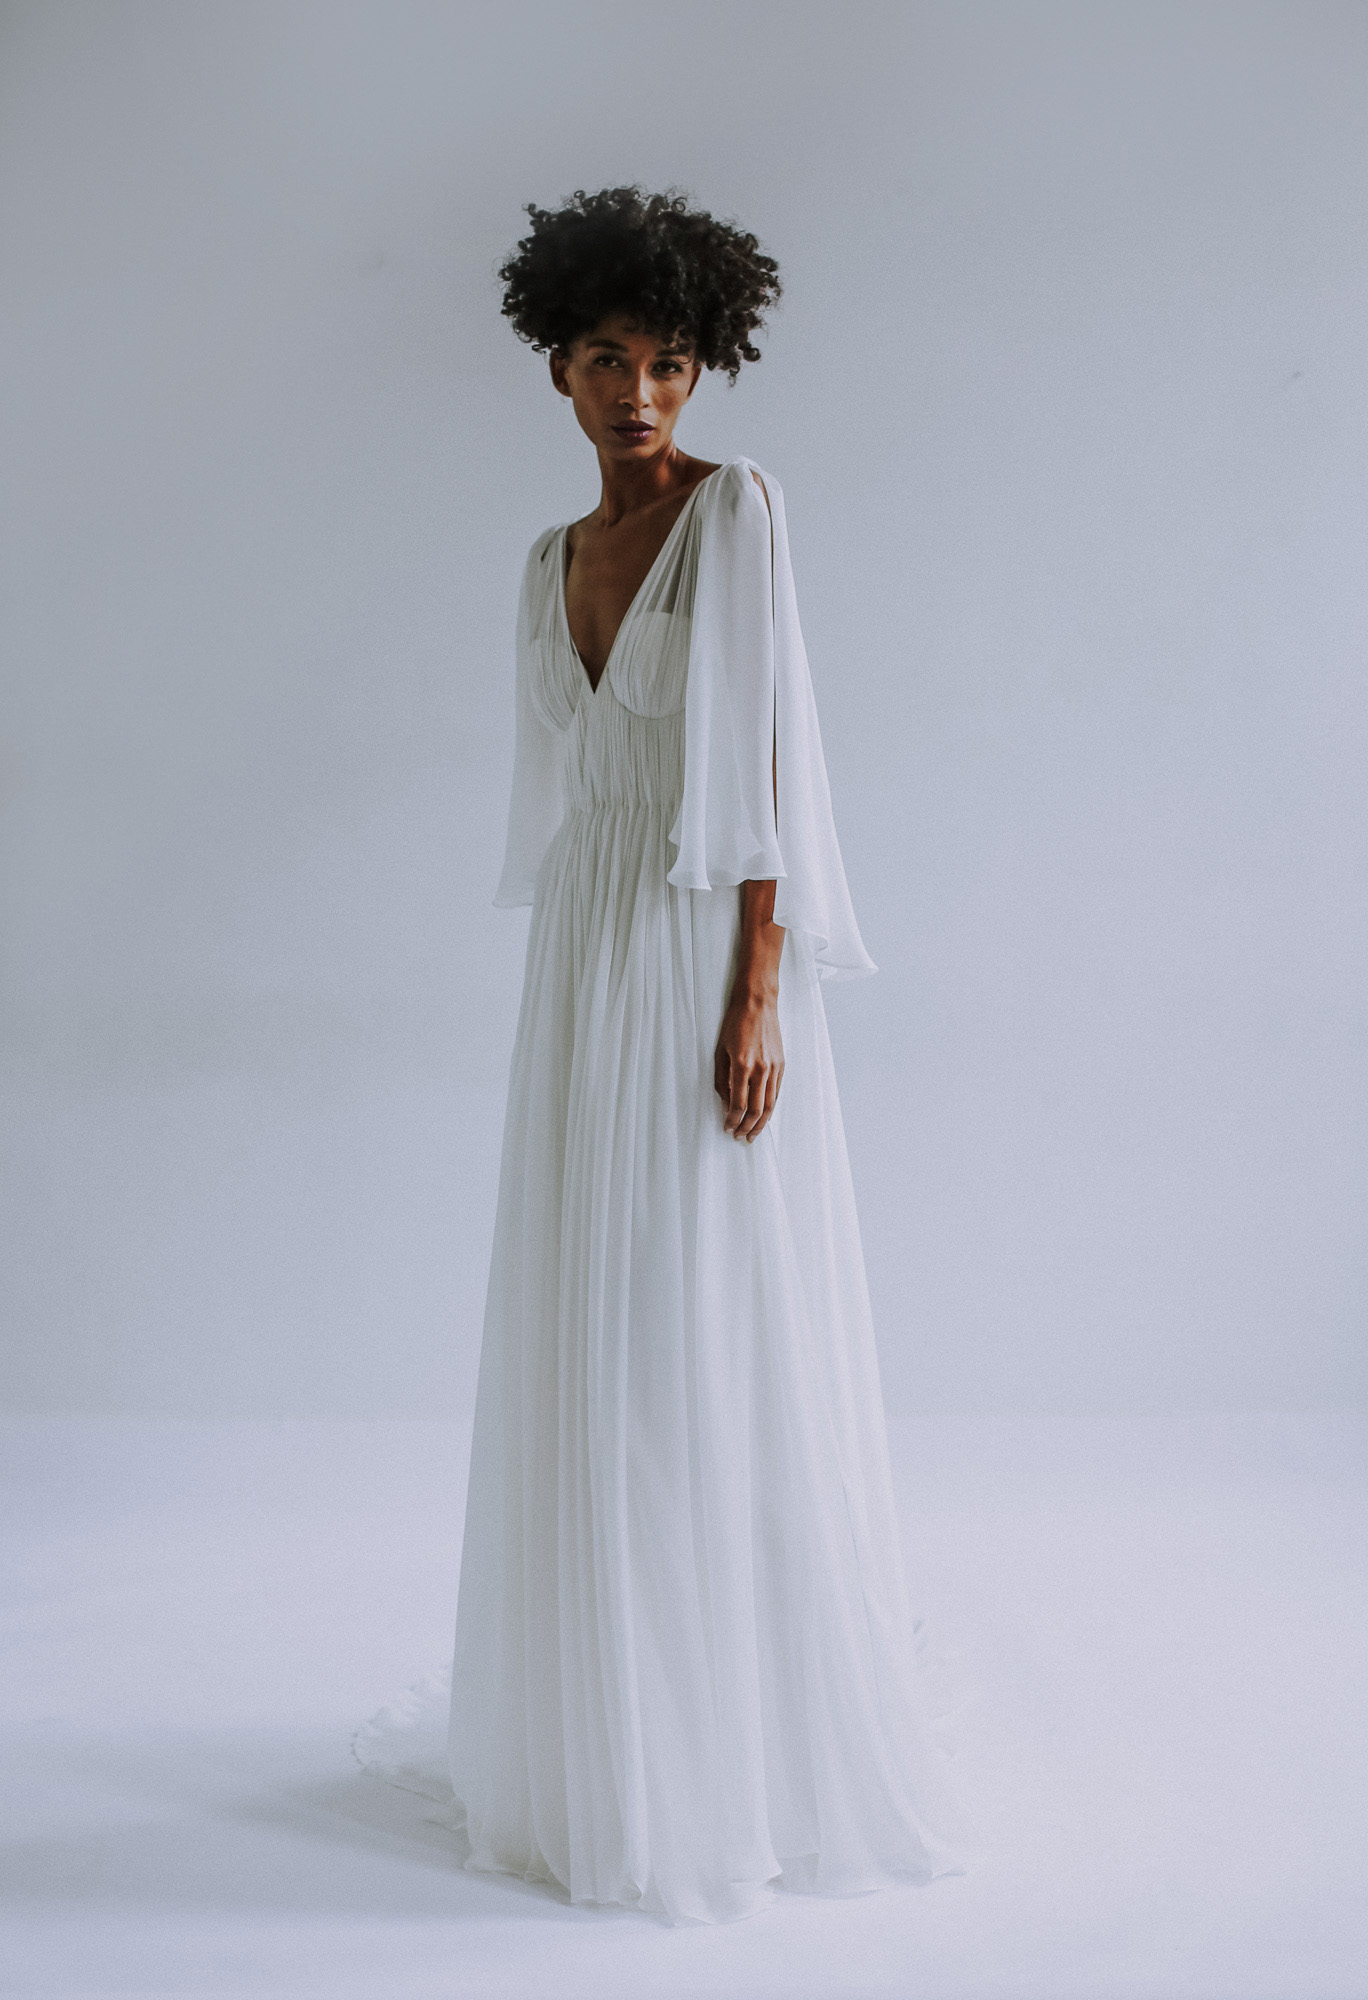 leanne-marshall-wedding-gown-9.jpg